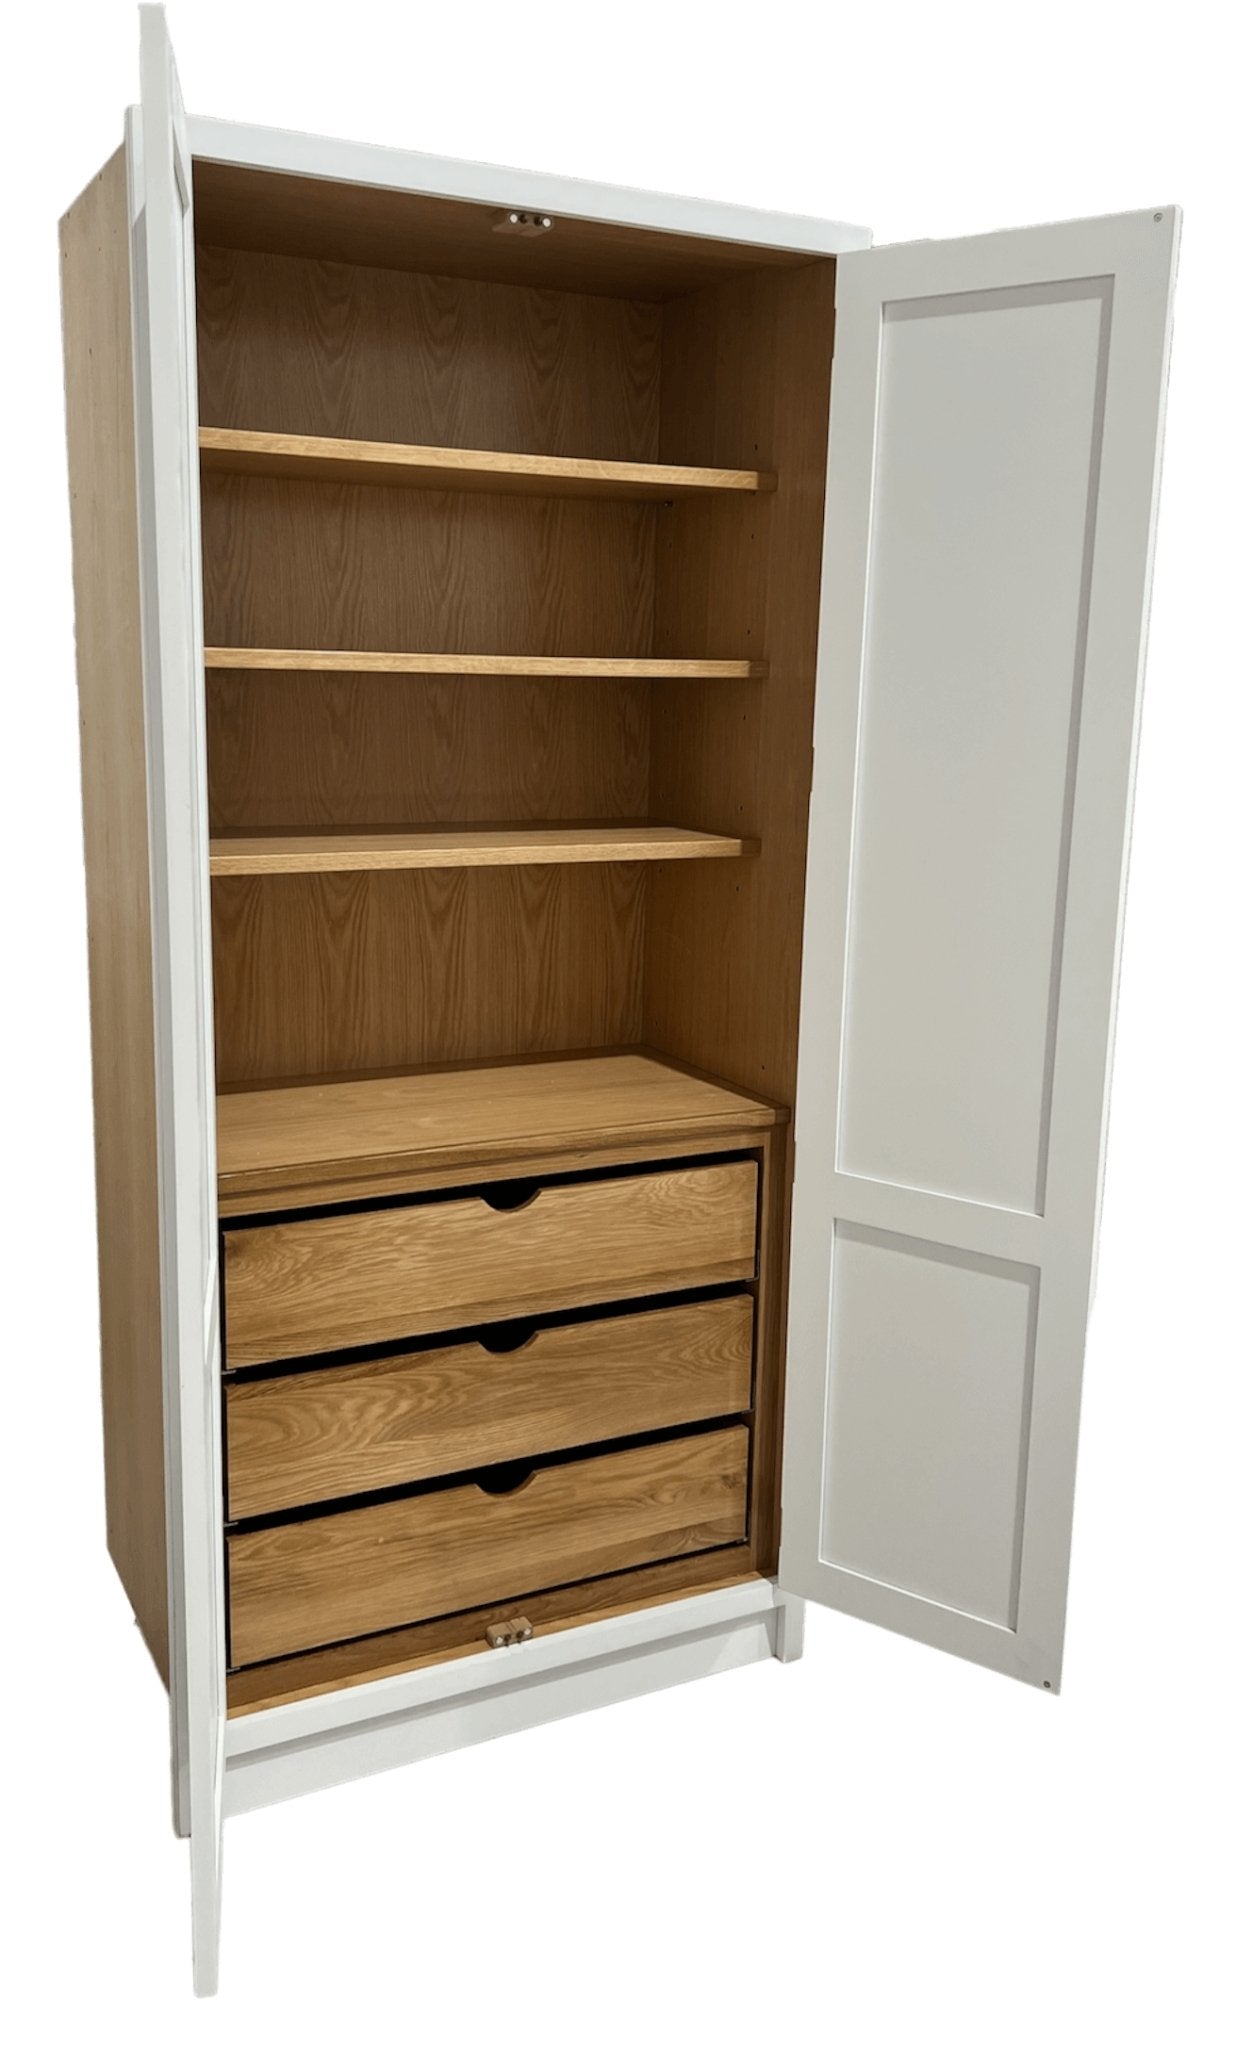 LI 1200 - Set of 3 Internal drawers for a 1200 larder - Classic Kitchens Direct